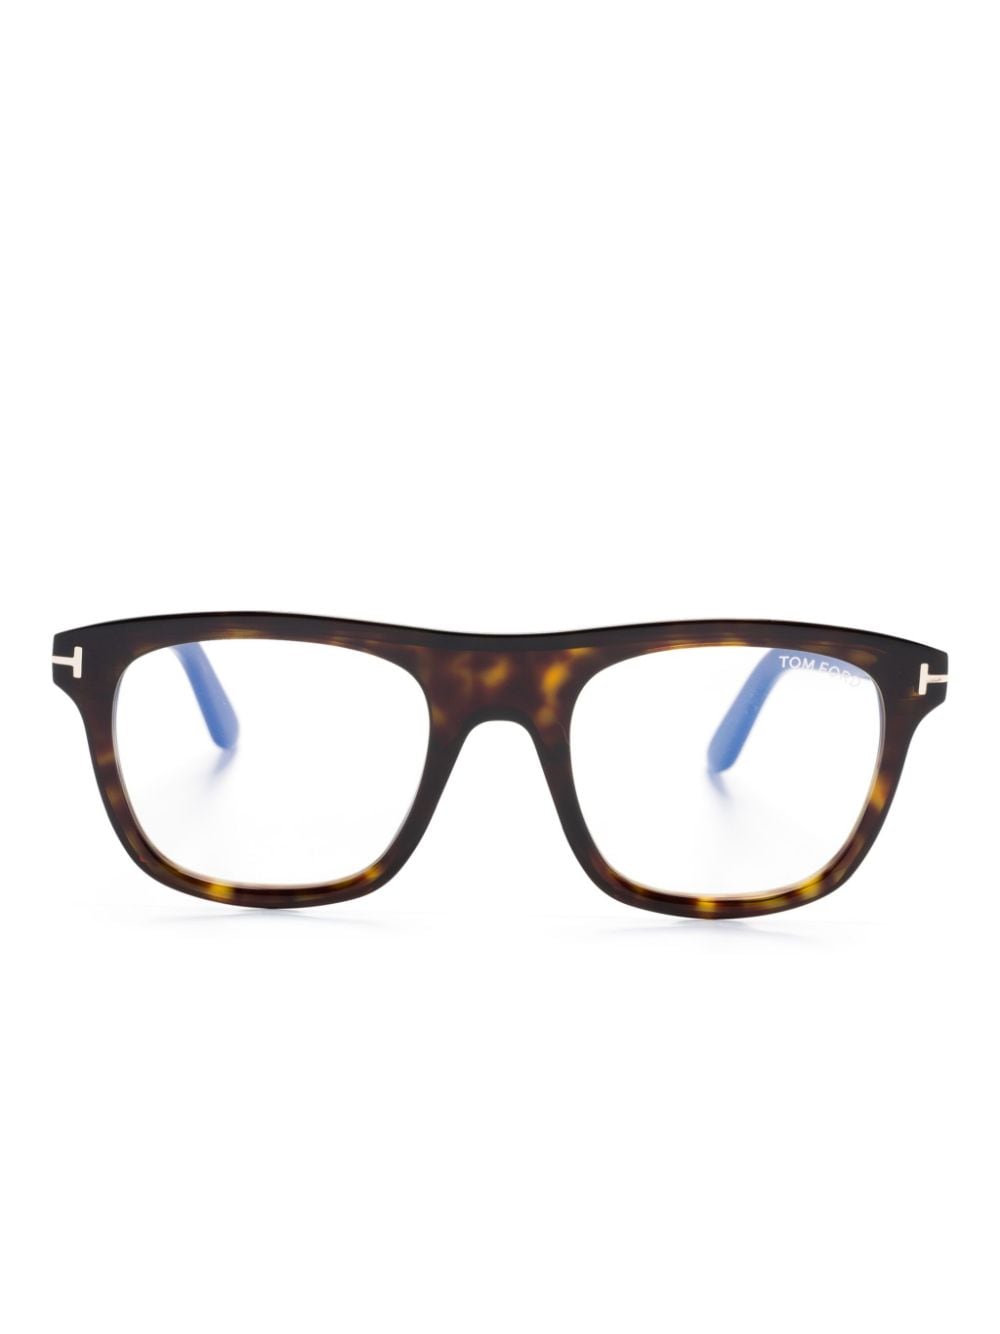 TOM FORD Eyewear tortoiseshell square-frame glasses - Brown von TOM FORD Eyewear